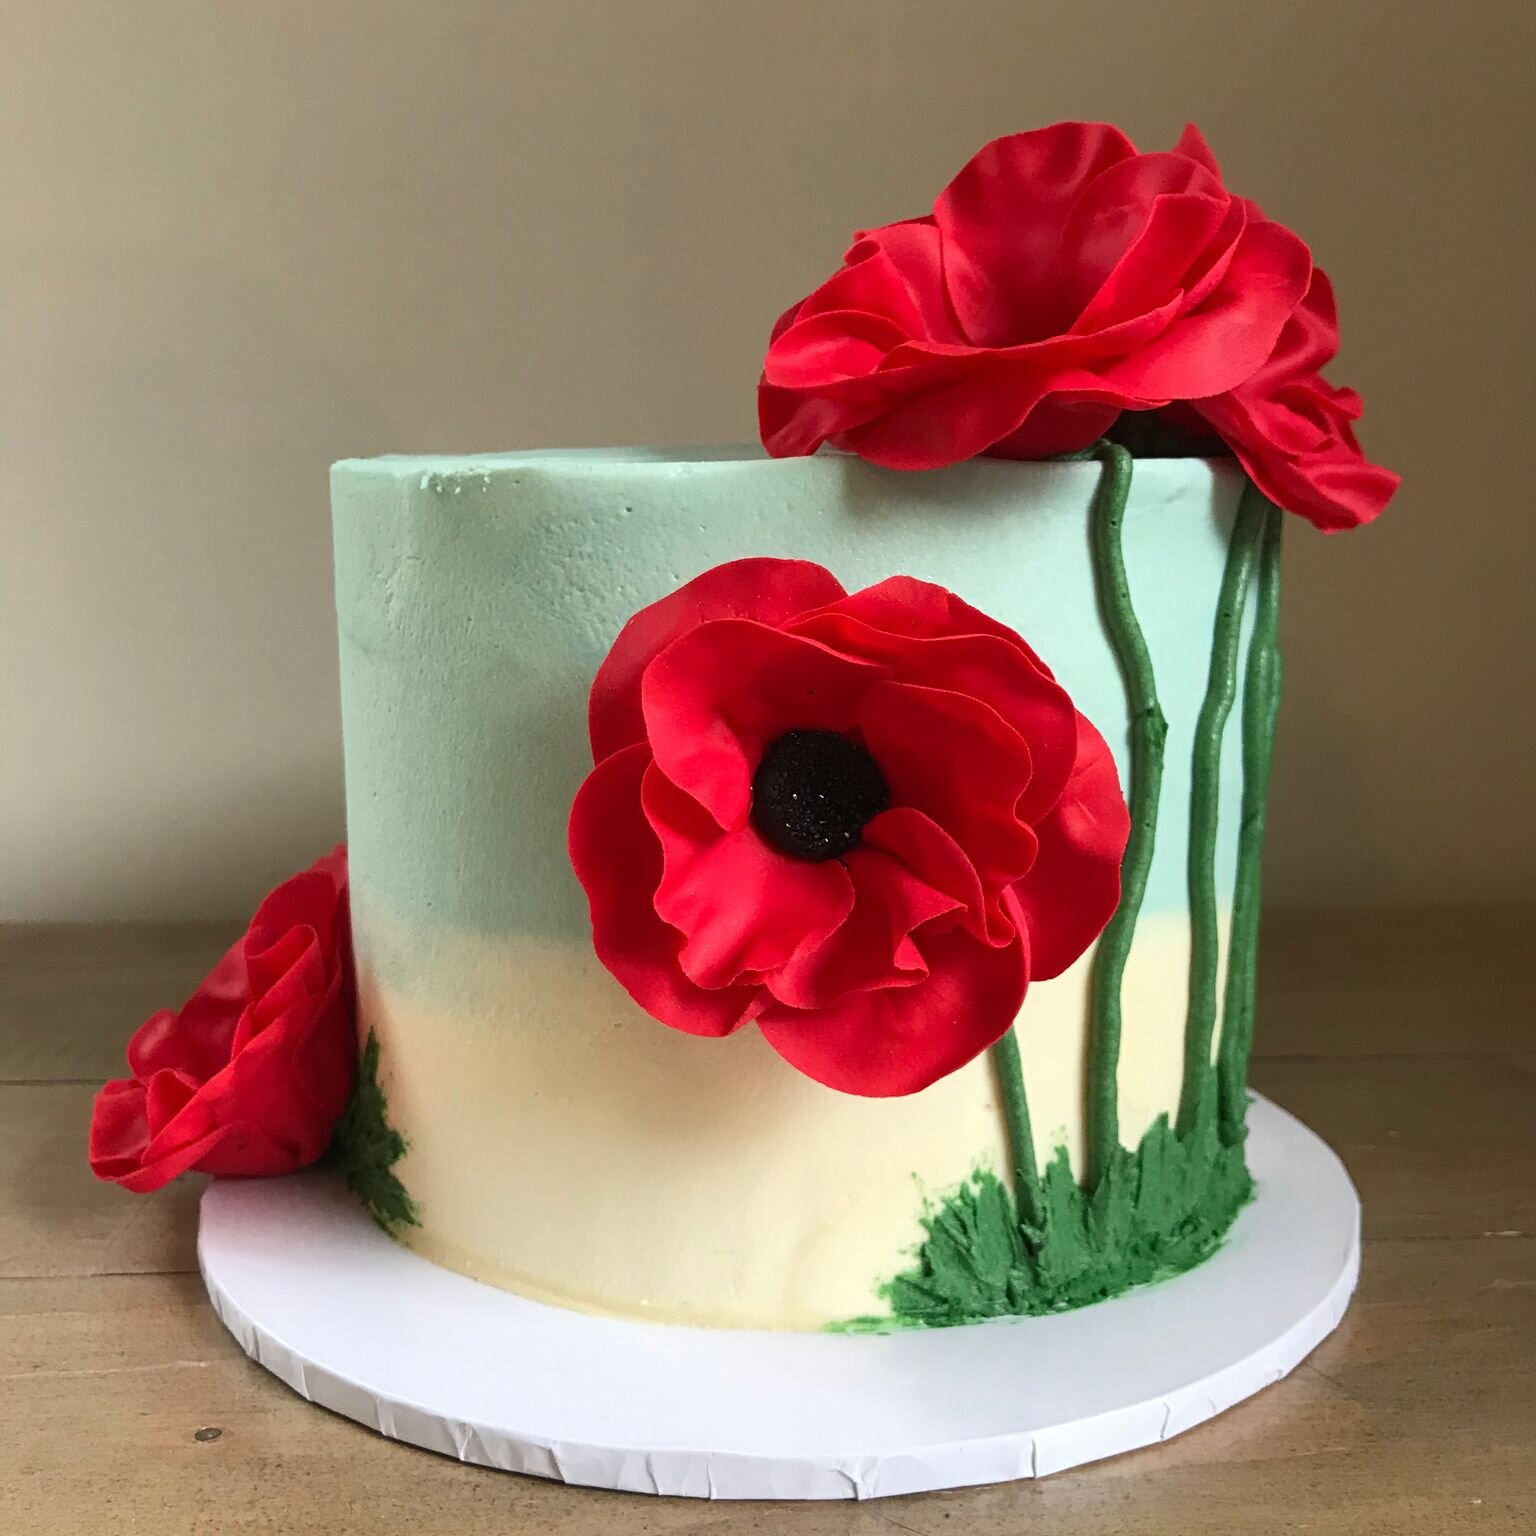 Bespoke Birthday Cakes in London – Arapina Bakery